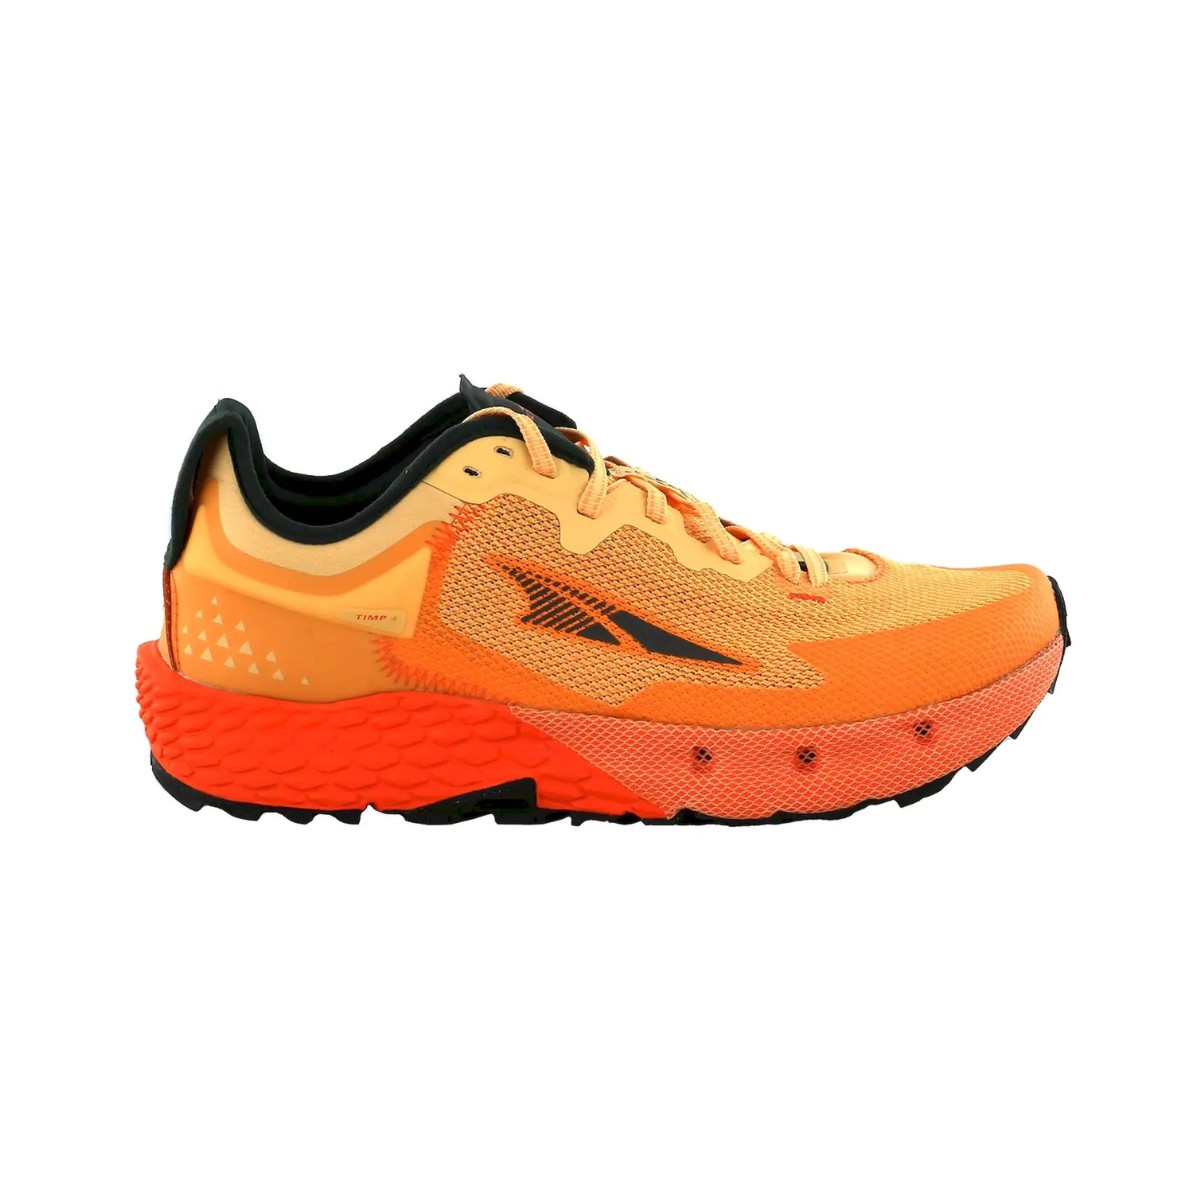 Schuhe Altra Timp 4 Orange AW22, Größe 41 - EUR